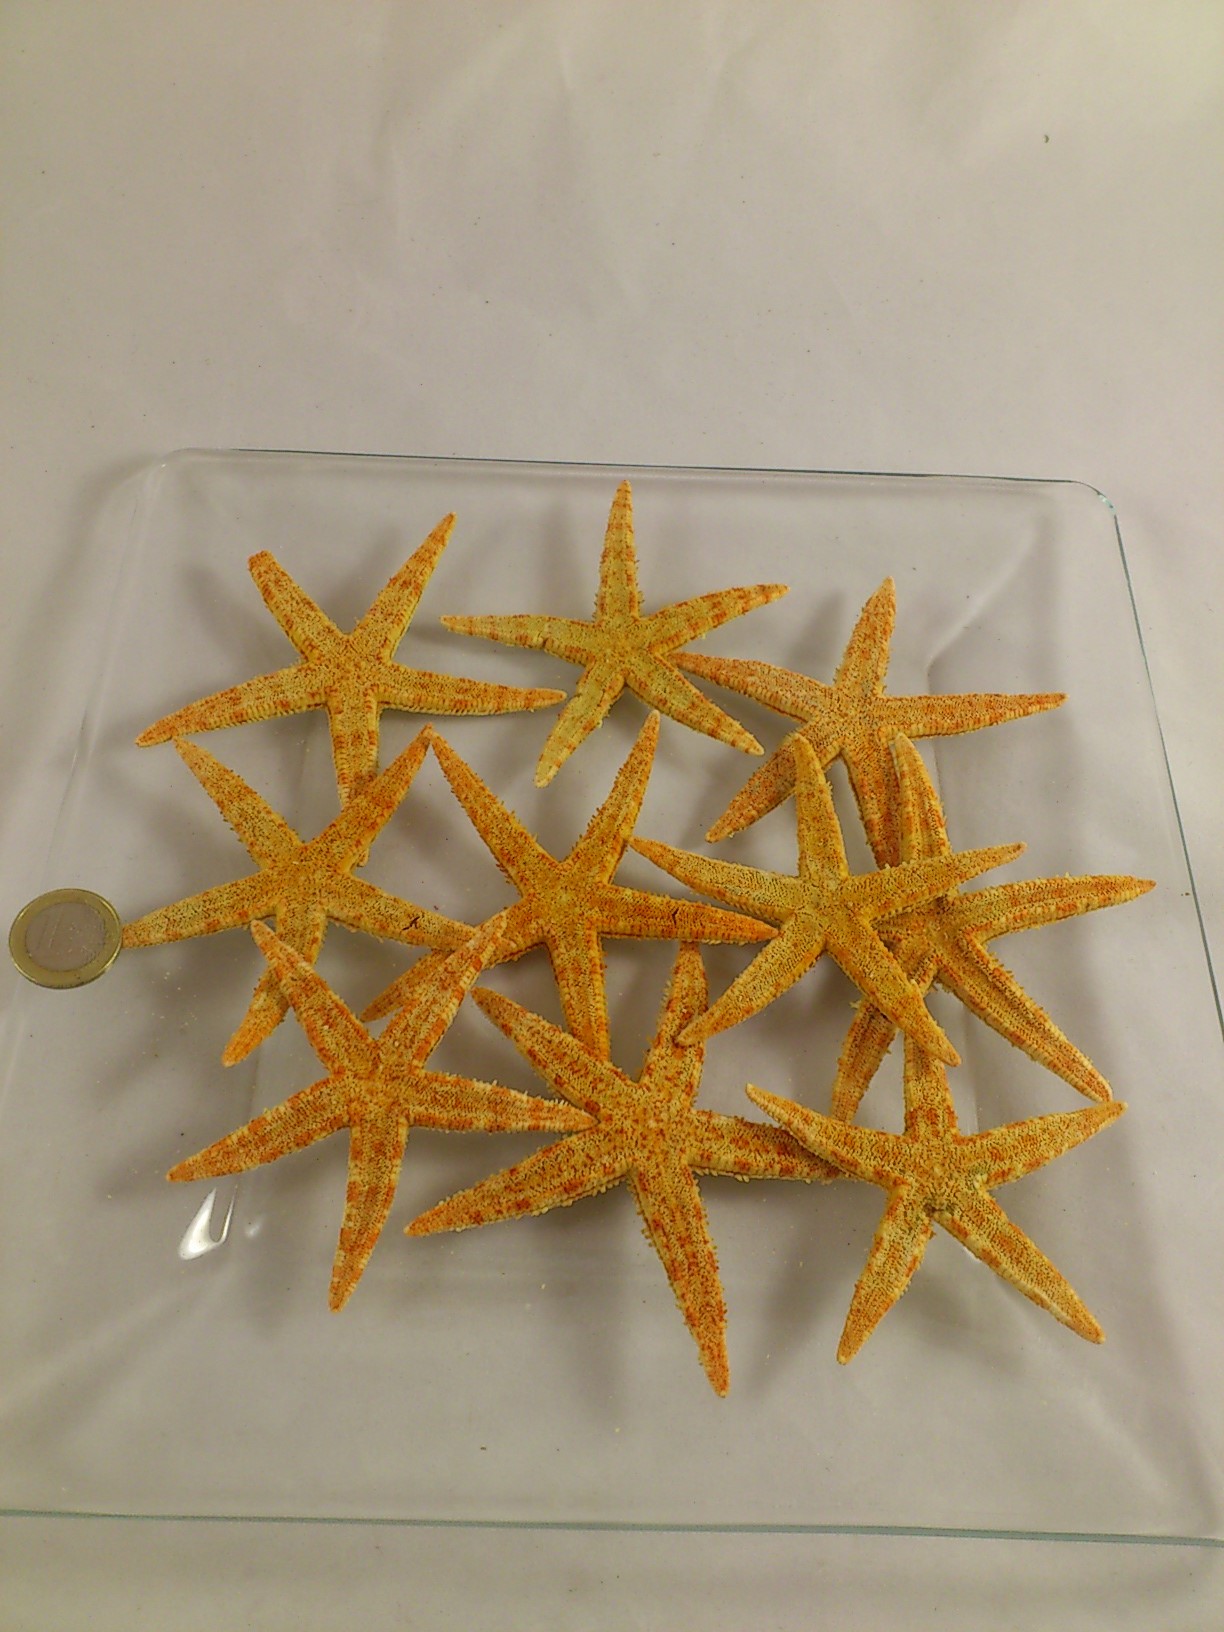 Seestern 7-10 cm (sugar starfish) 10 st.